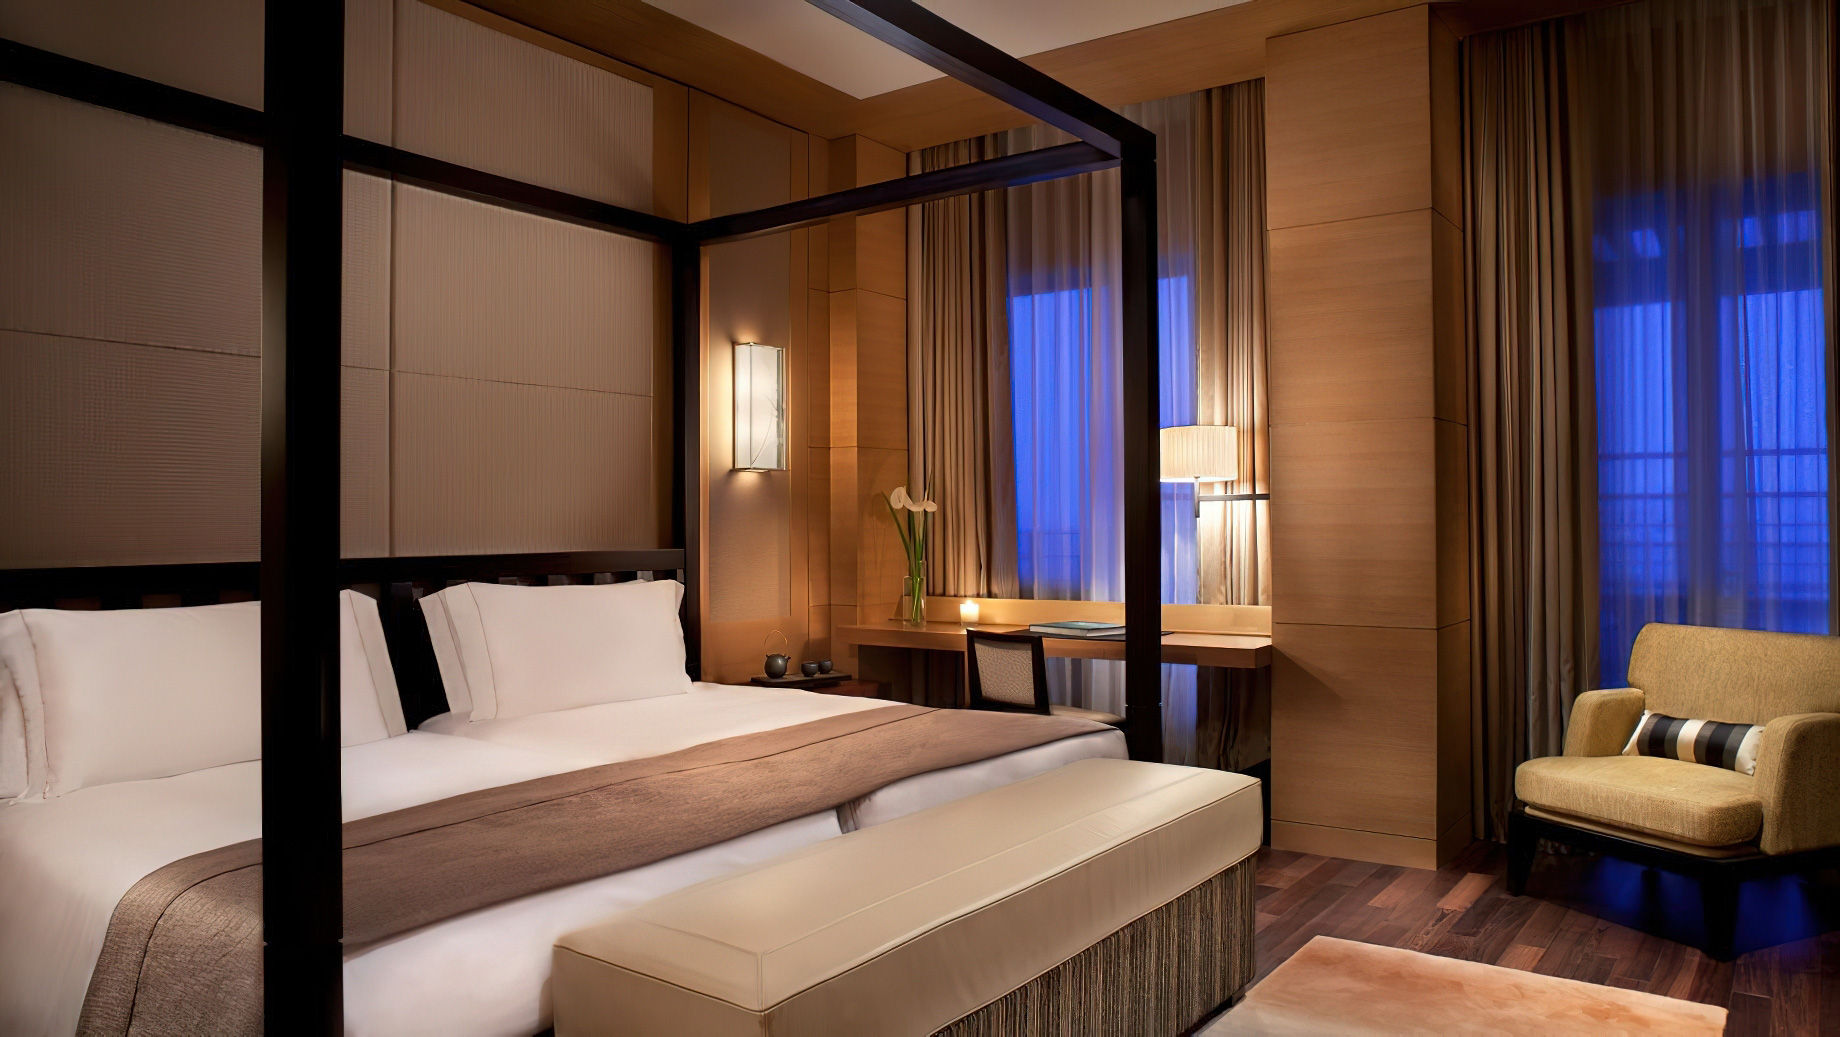 The Ritz-Carlton, Okinawa Hotel - Okinawa, Japan - Ritz-Carlton Suite Bedroom